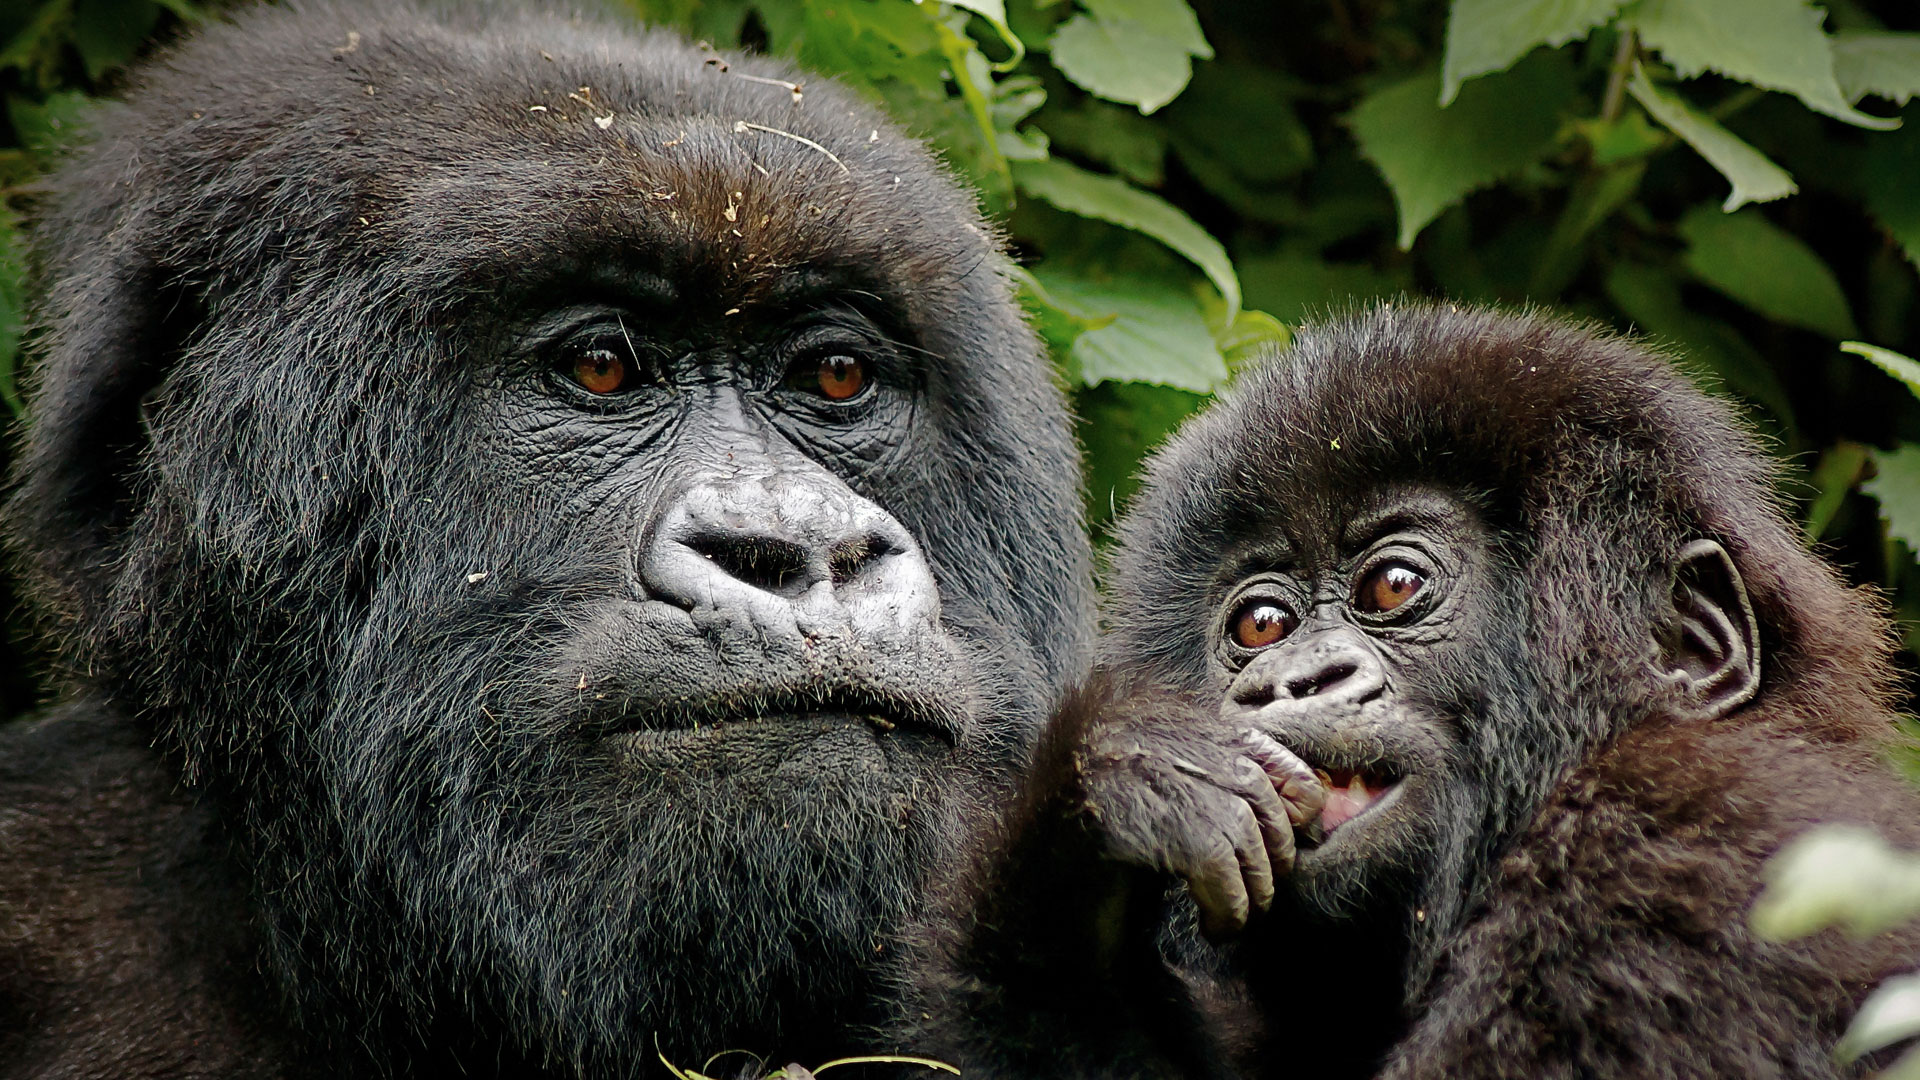 Things to put into consideration before booking a gorilla safari in Rwanda